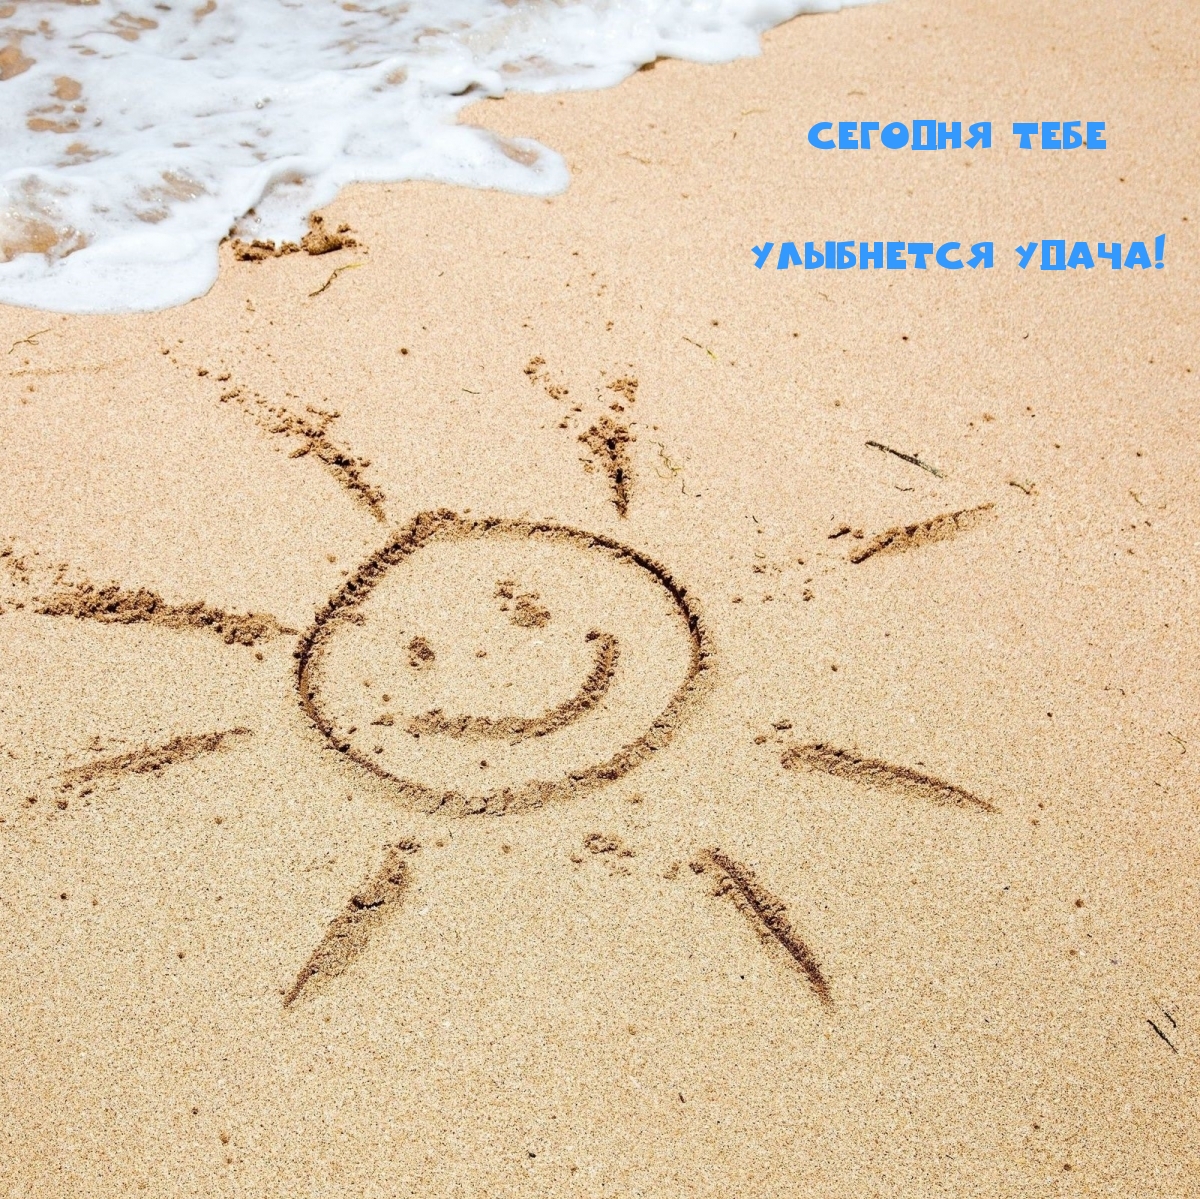 Нарисованное на песке солнце